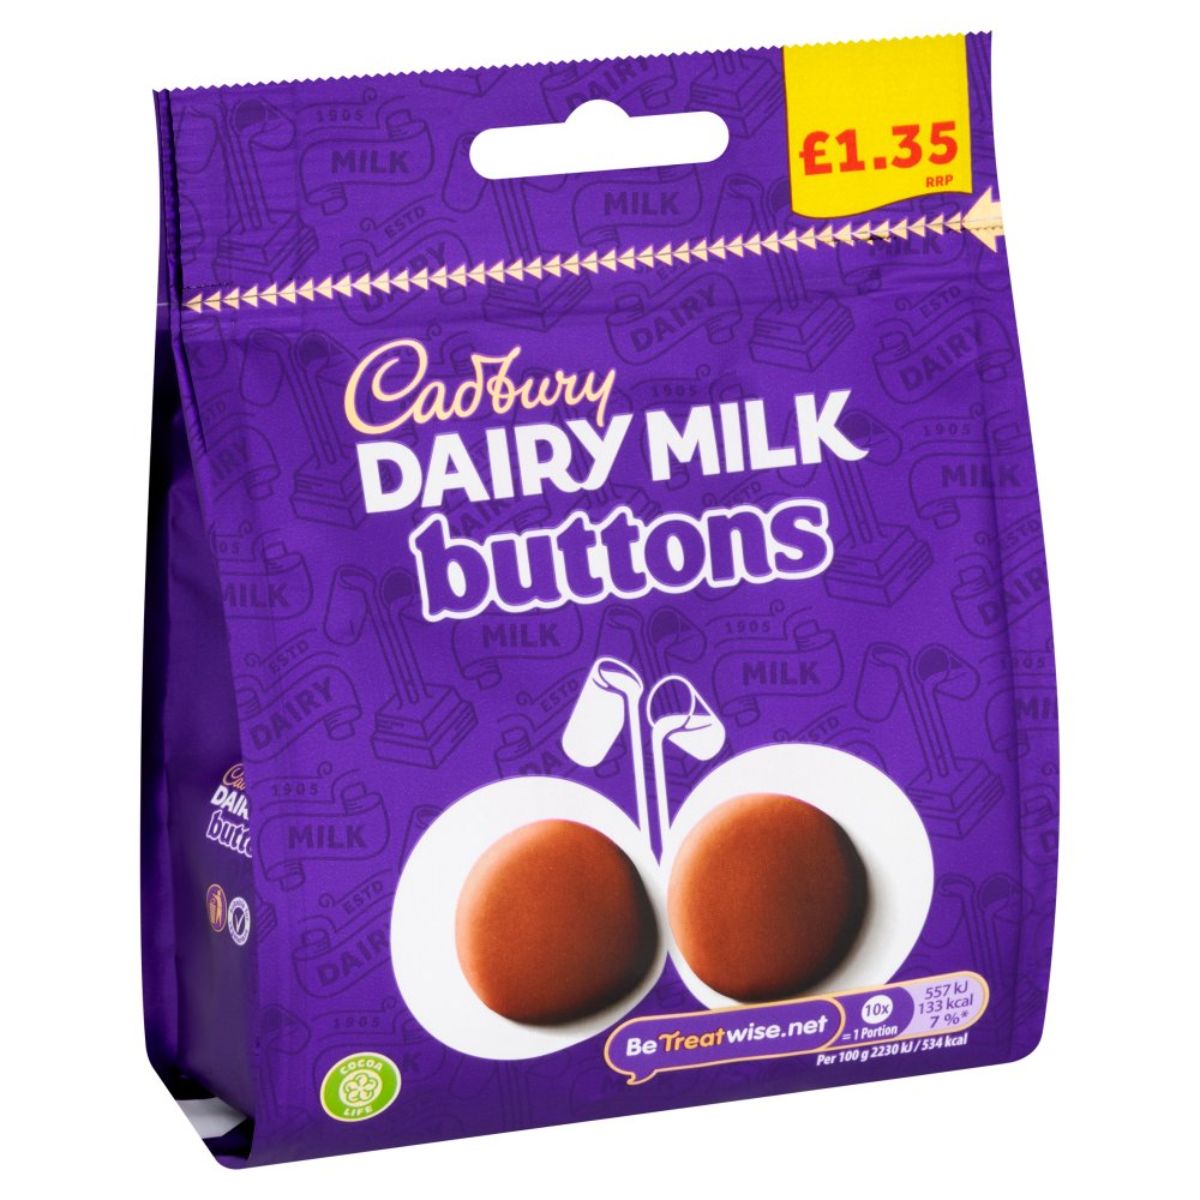 Cadbury - Dairy Milk Buttons - 95g.